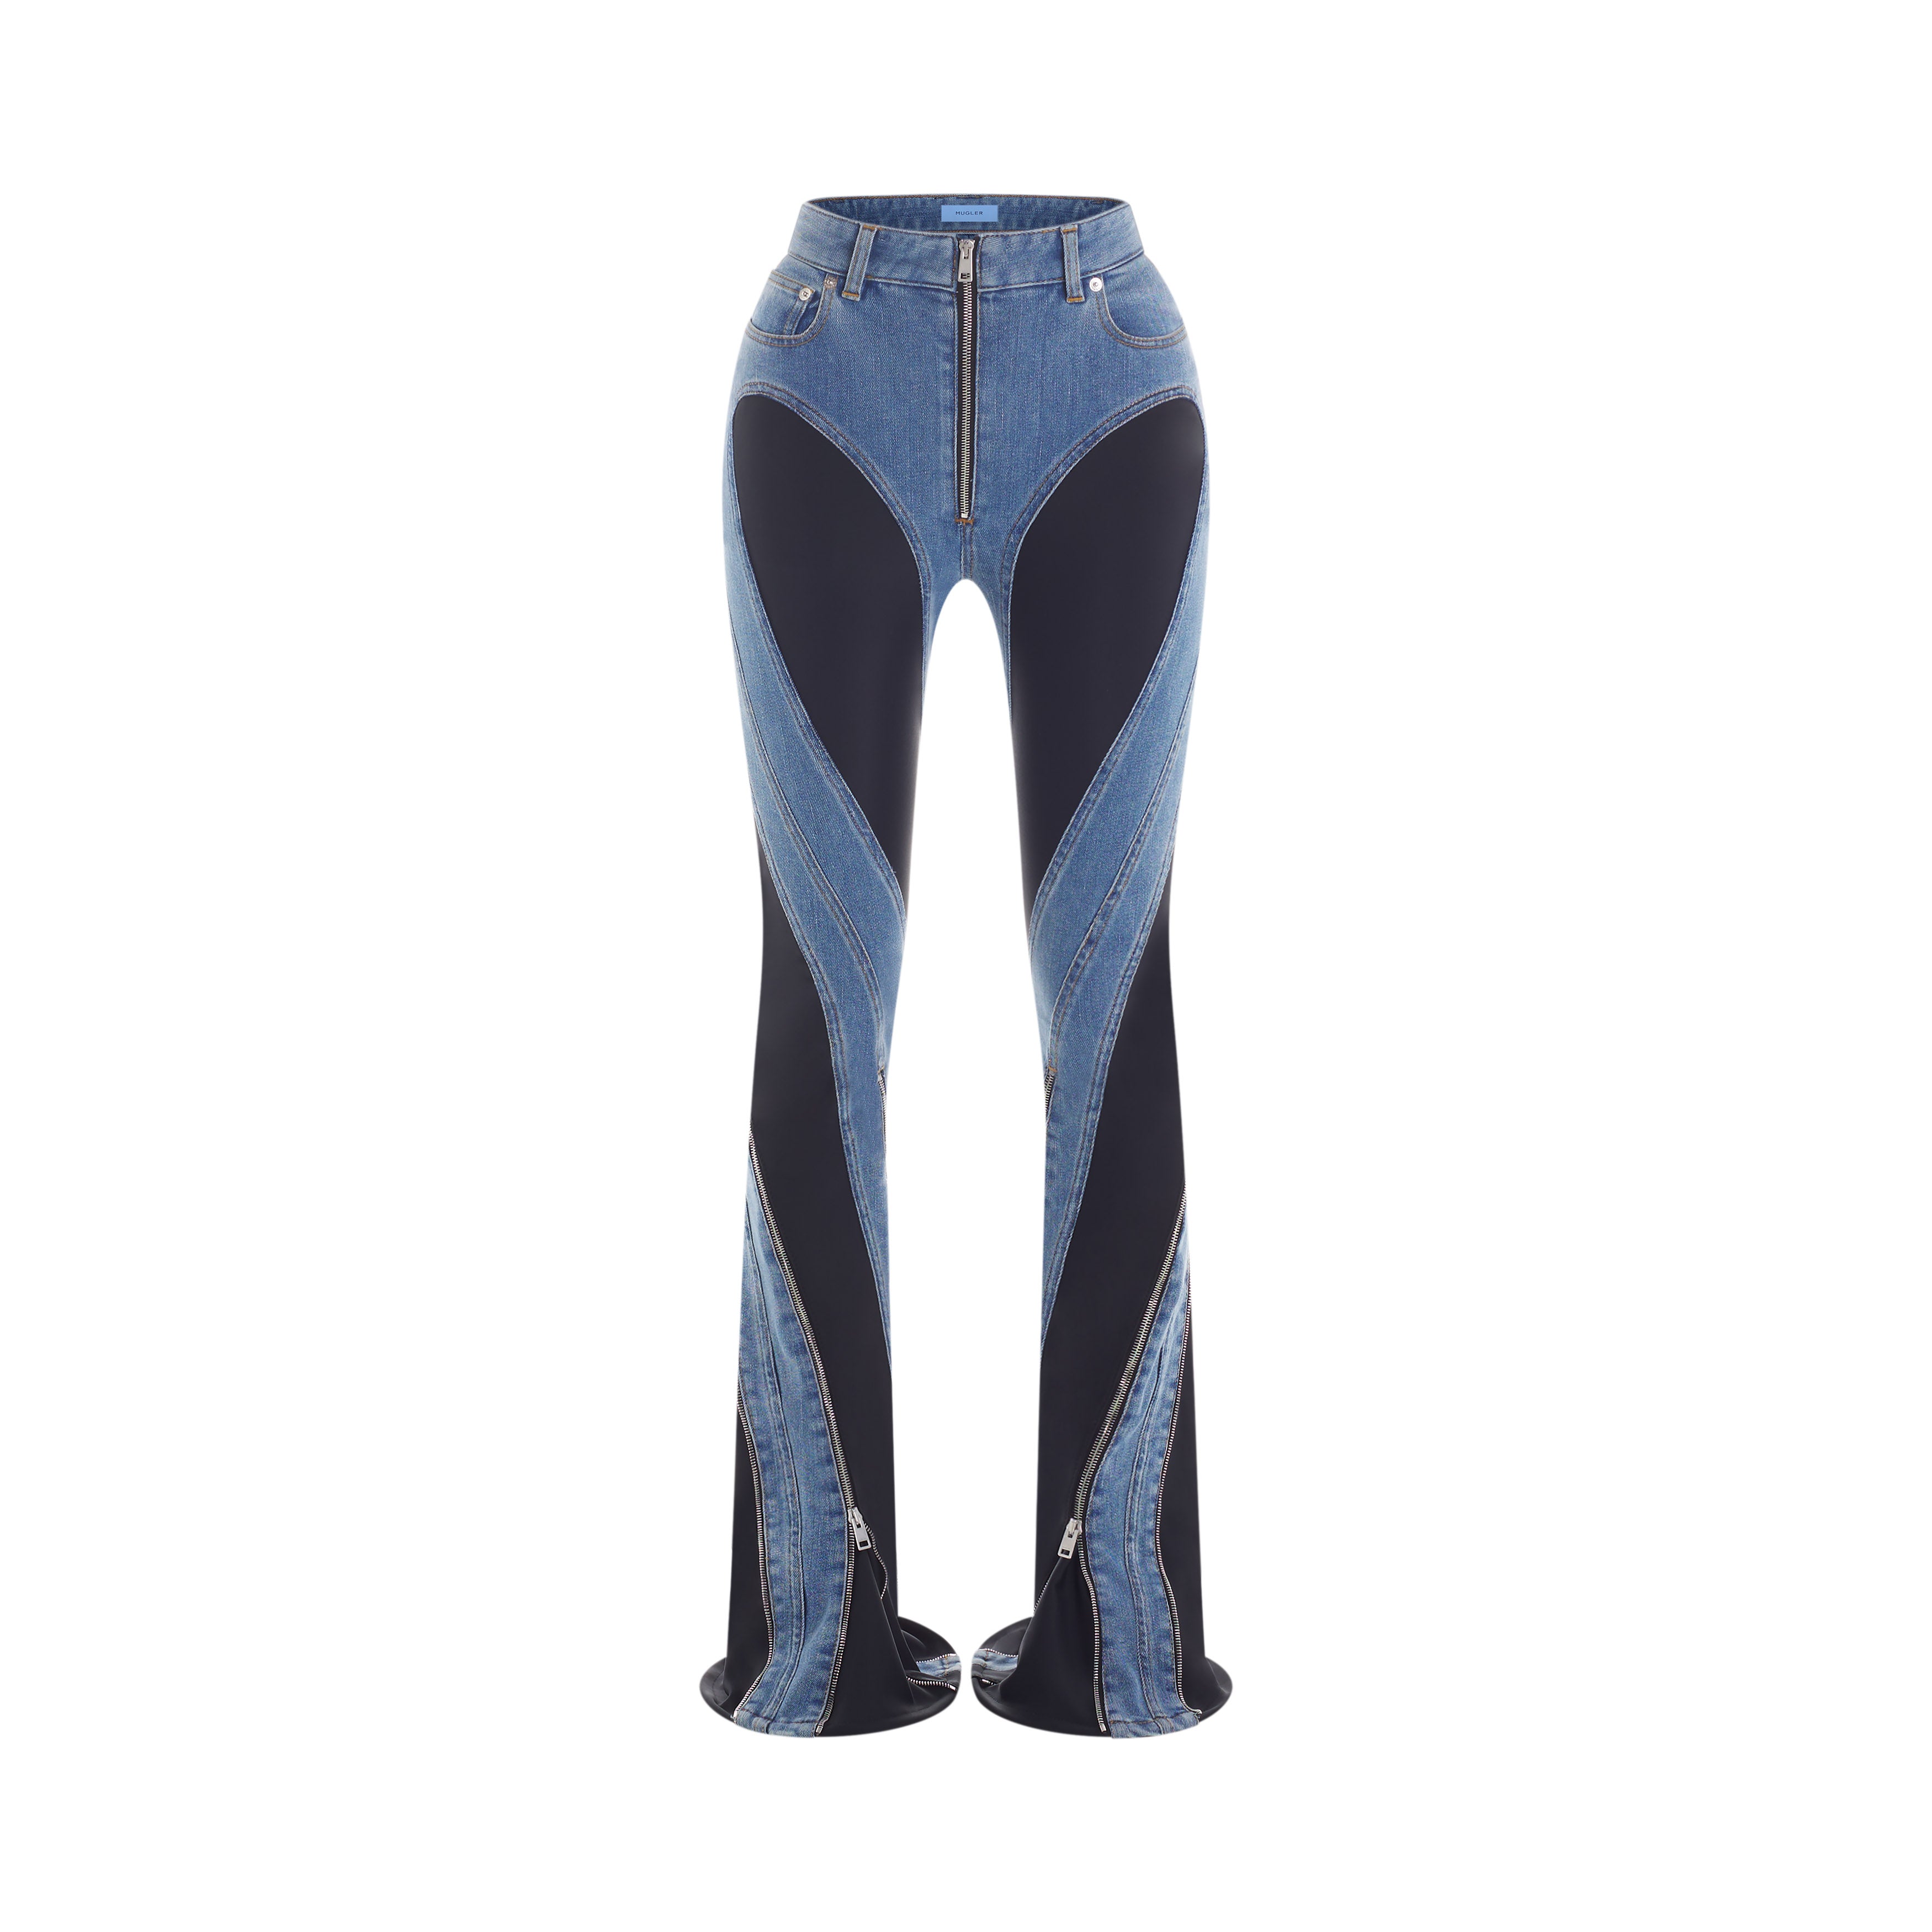 Stetson Women's Jeans | Official Site